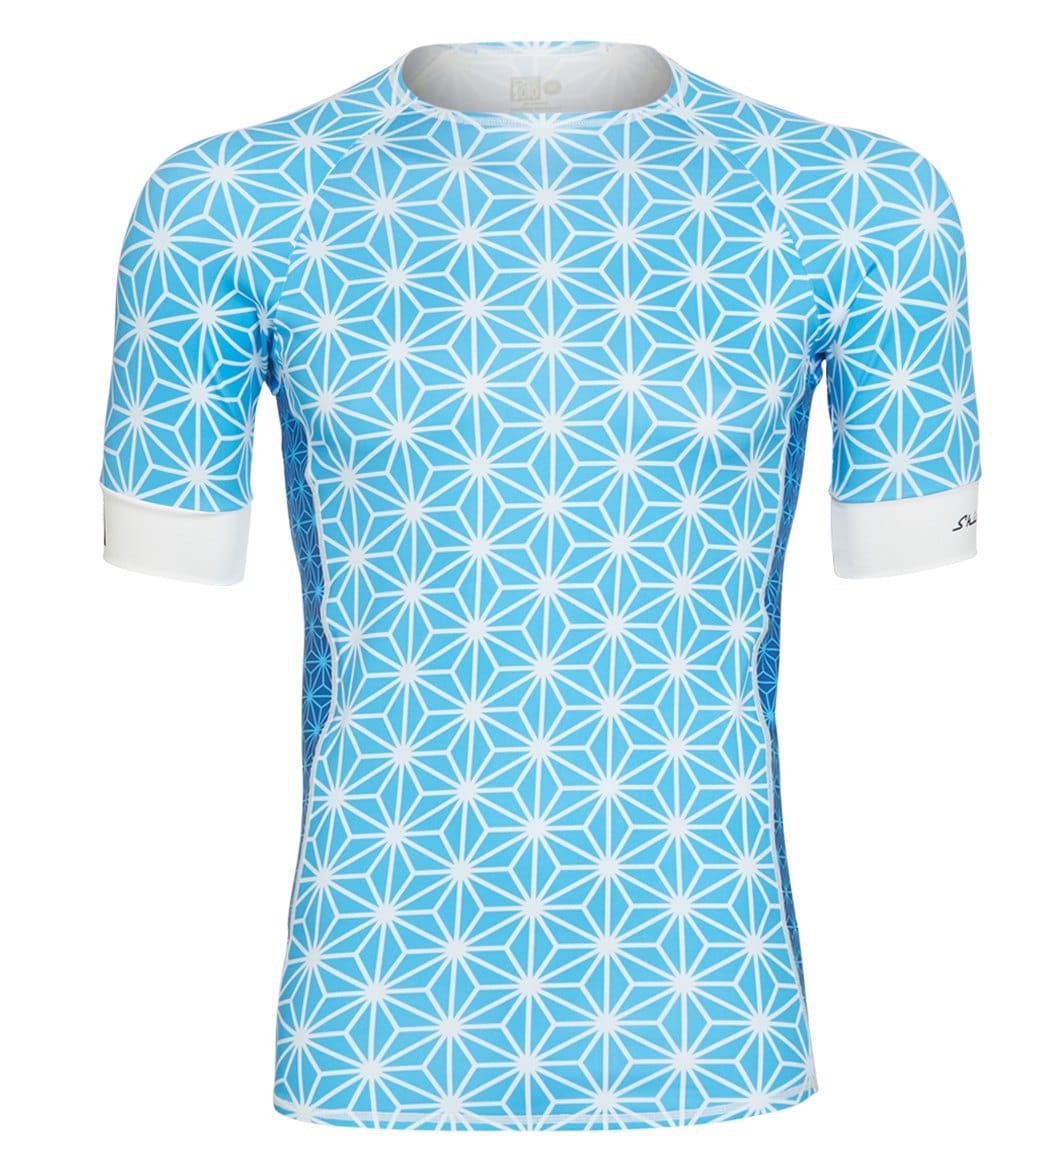 Desoto Men's Skin Cooler Short Sleeve Top Shirt - Blue Sparkle Small - Swimoutlet.com